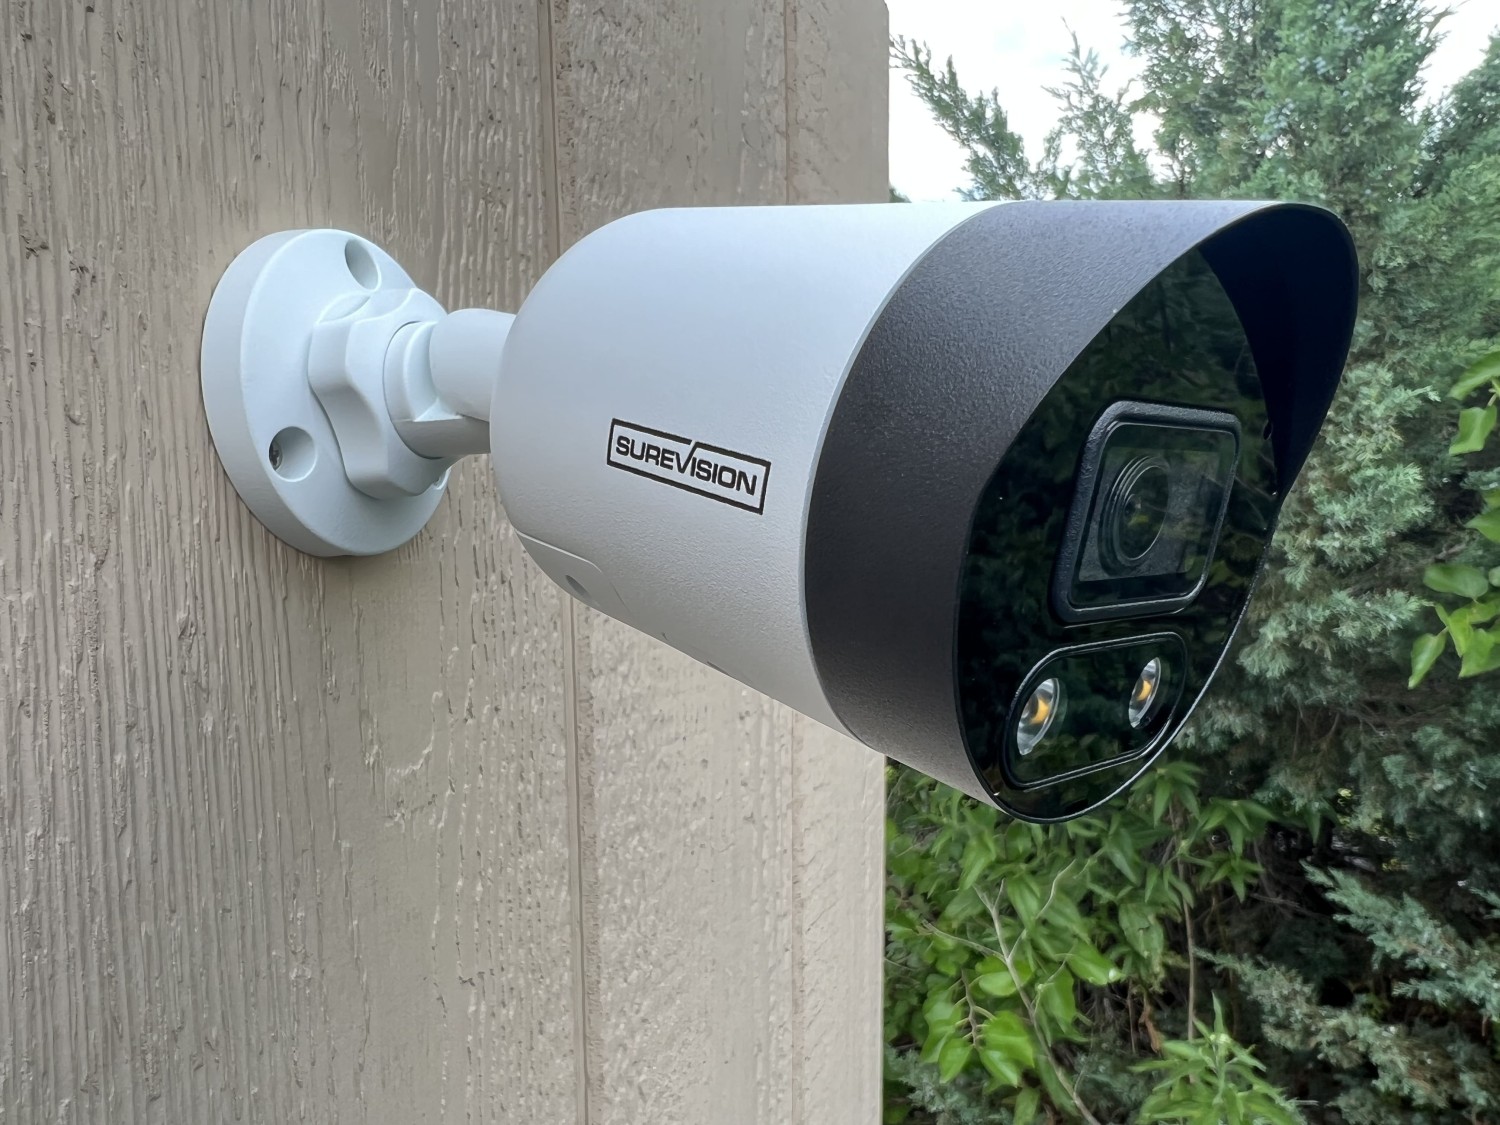 Smart Security Camera Features  CCTV Security Pros - CCTV Security Pros